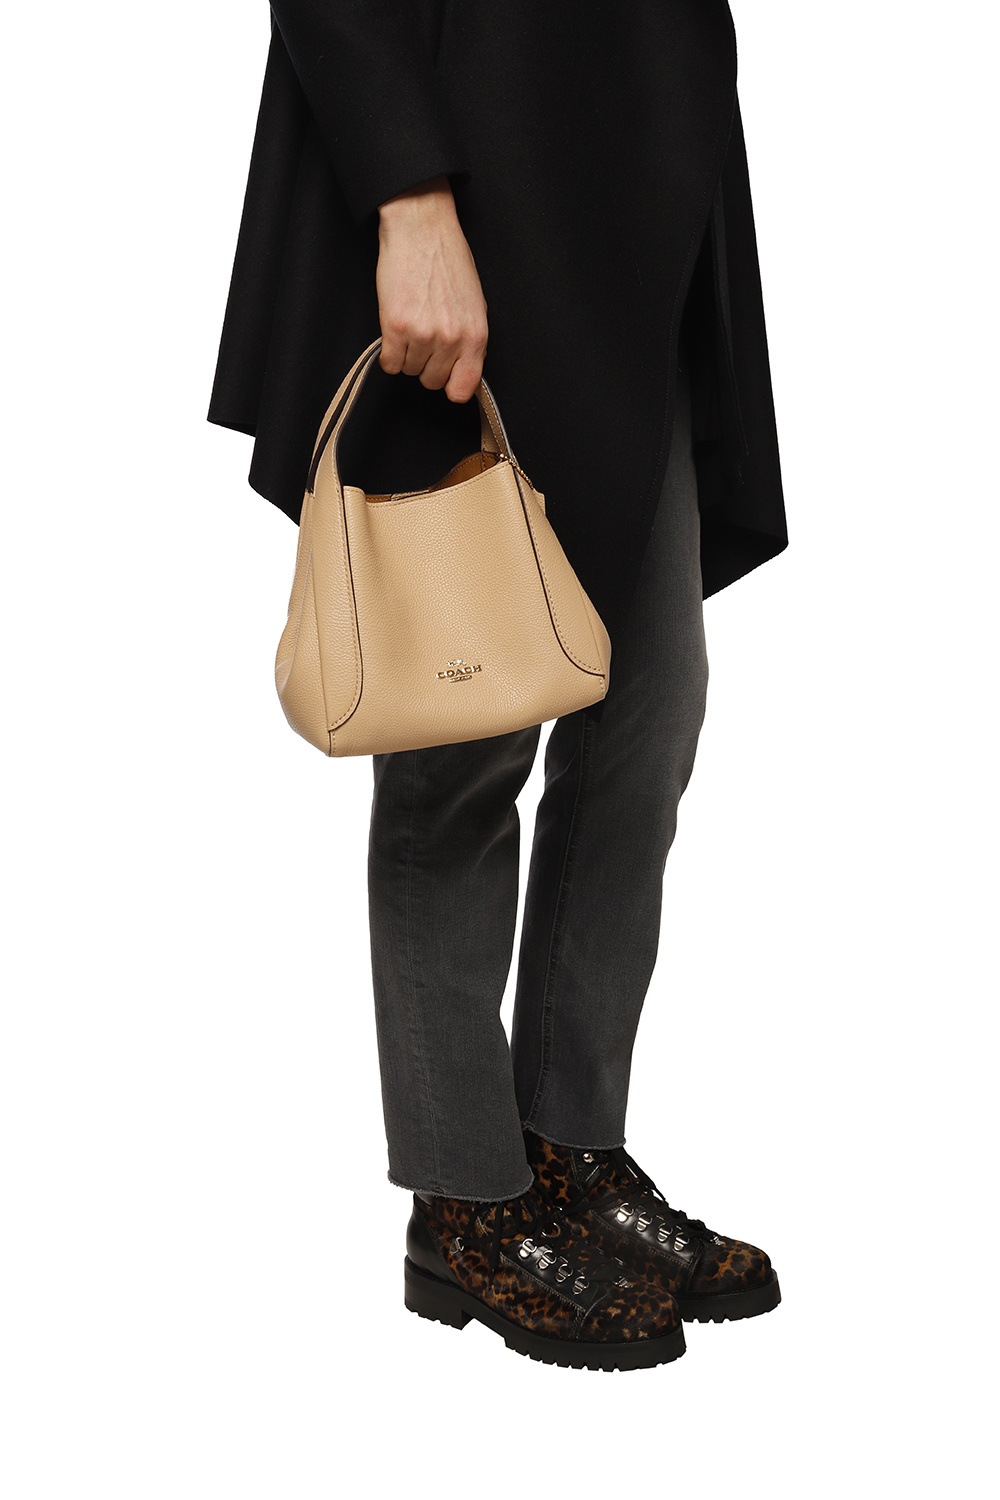 COACH DILLON SANDALS, Women's Bags, IetpShops